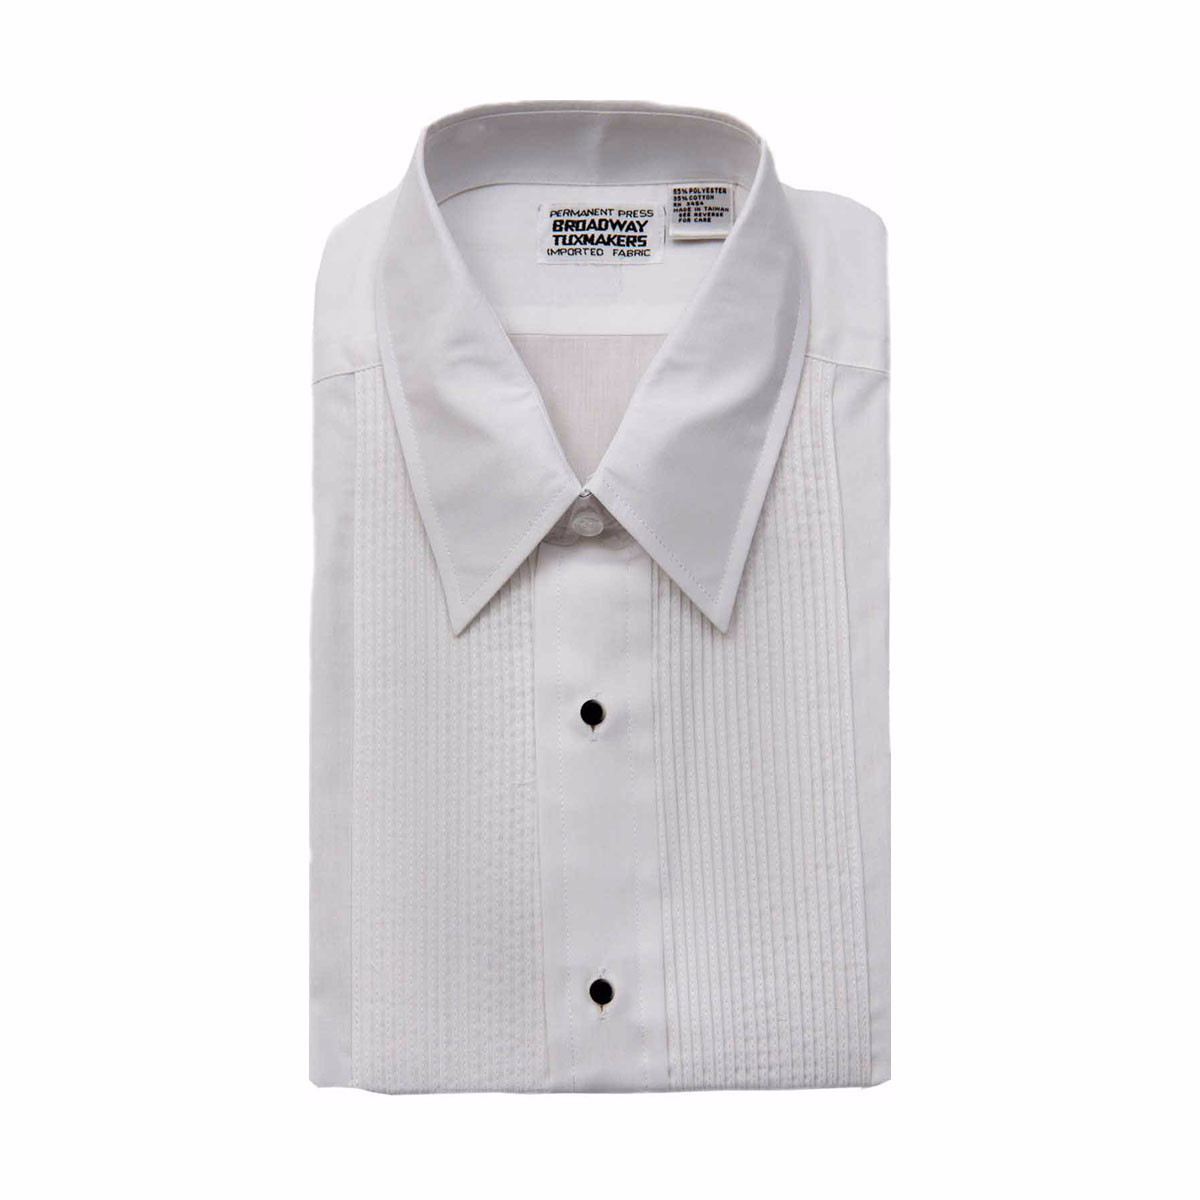 Men's White Tuxedo Shirt, Lay Down Collar & 1/8" Pleats